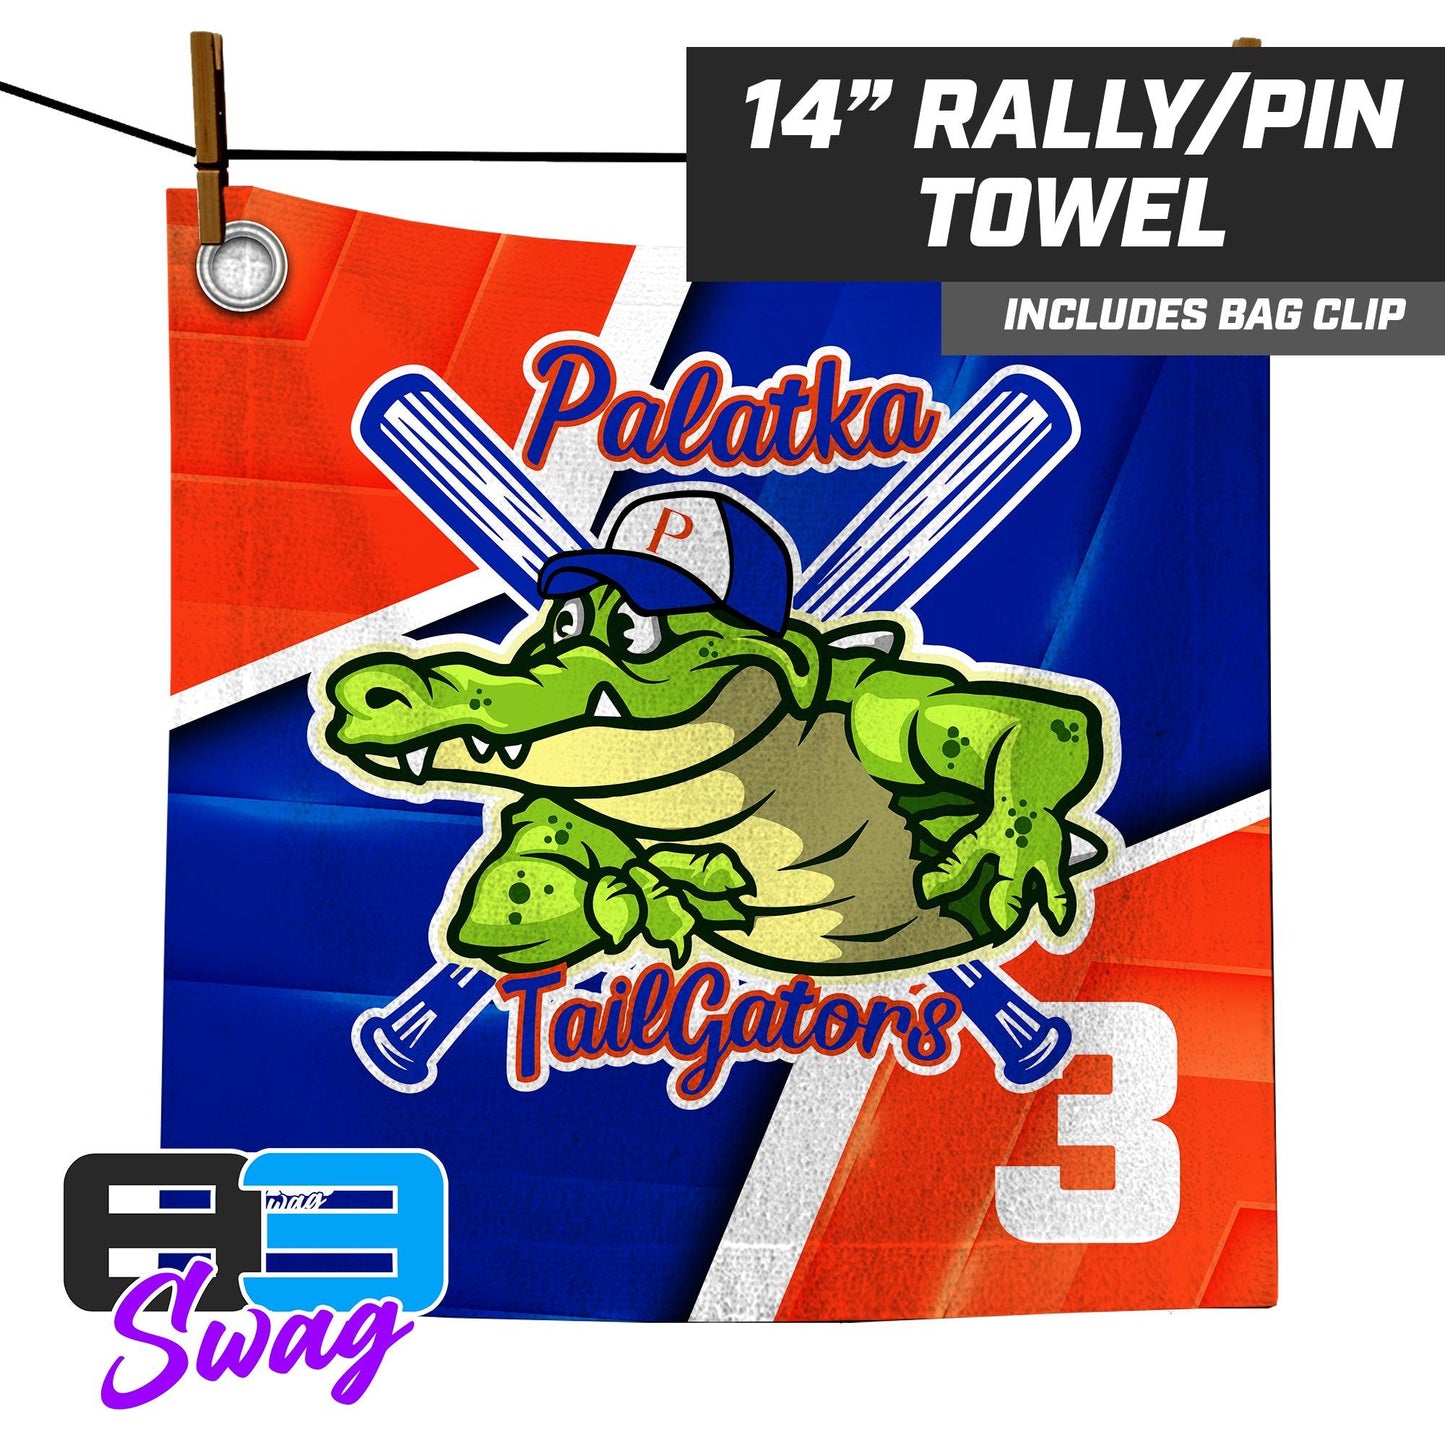 14"x14" Rally Towel - Palatka TailGators Baseball - 83Swag